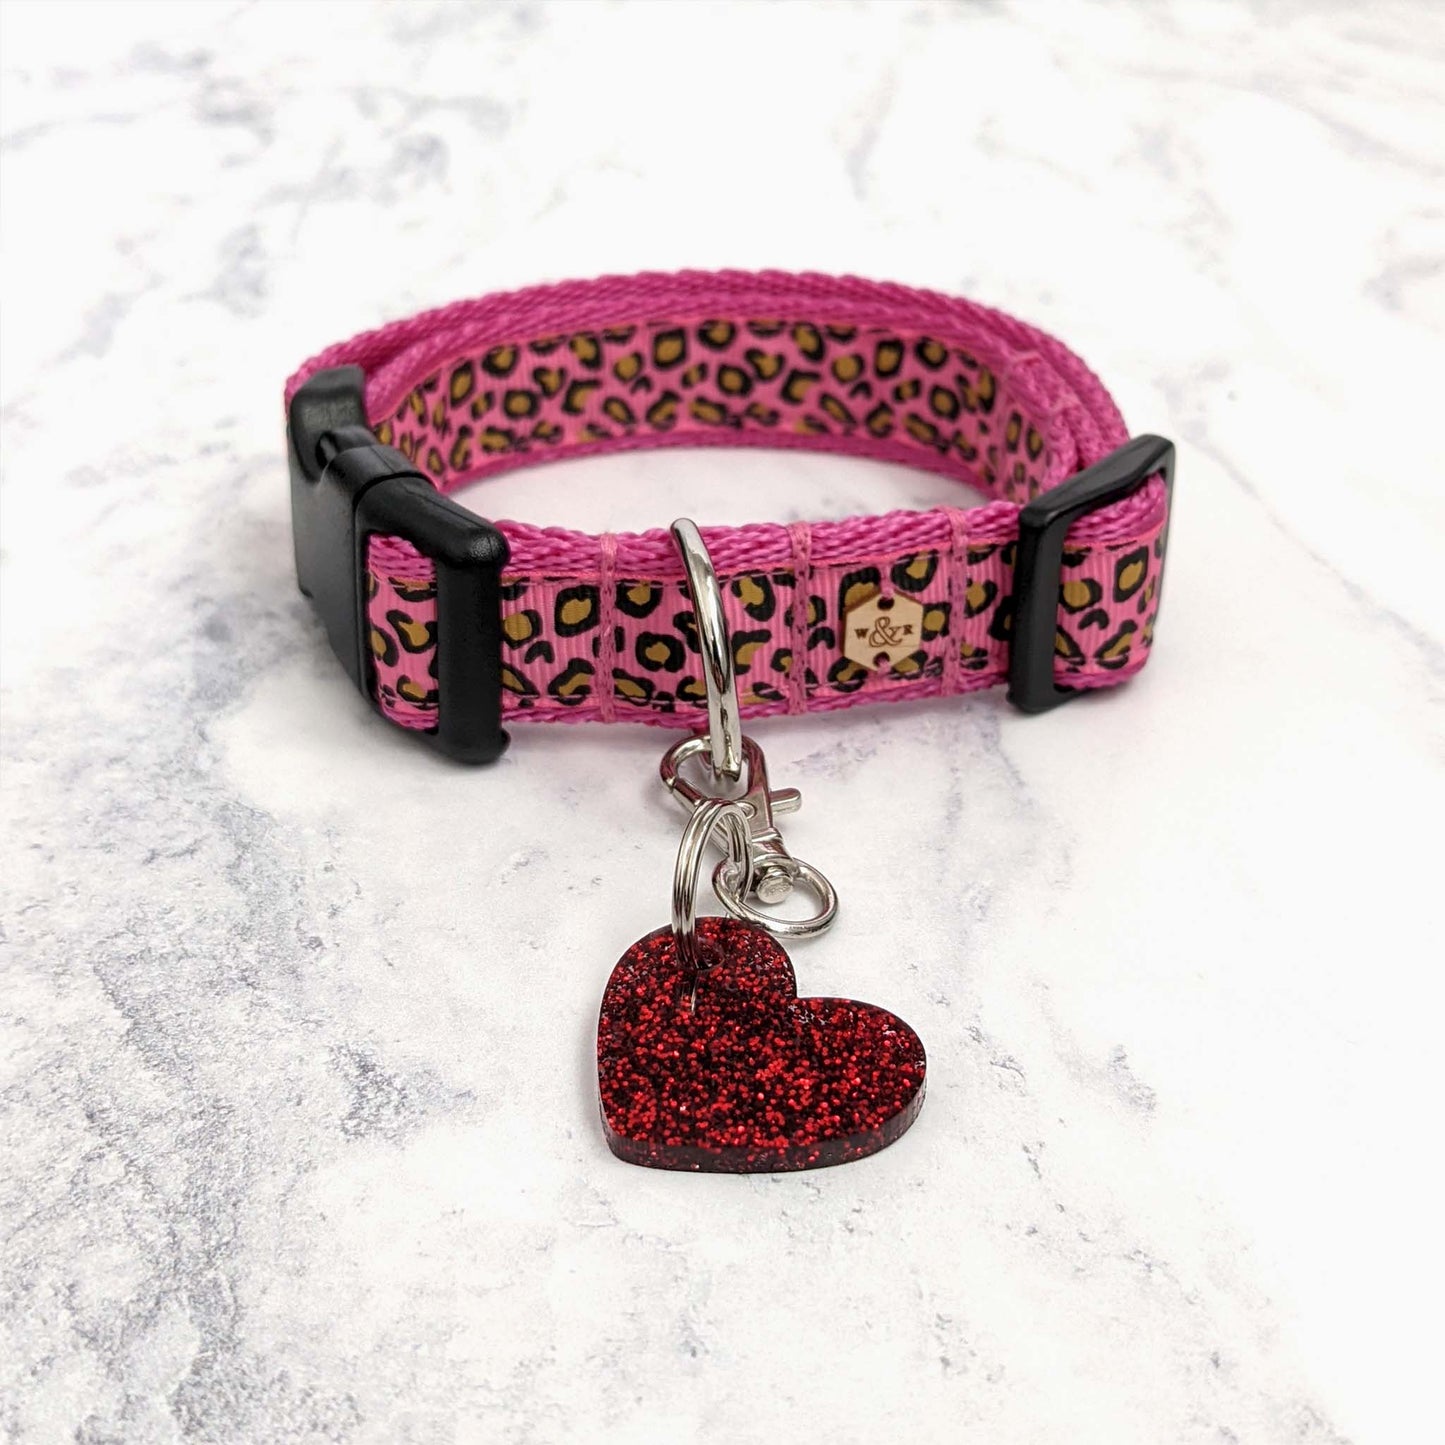 Wren & Rye Hot Pink Leopard Print Dog Collar